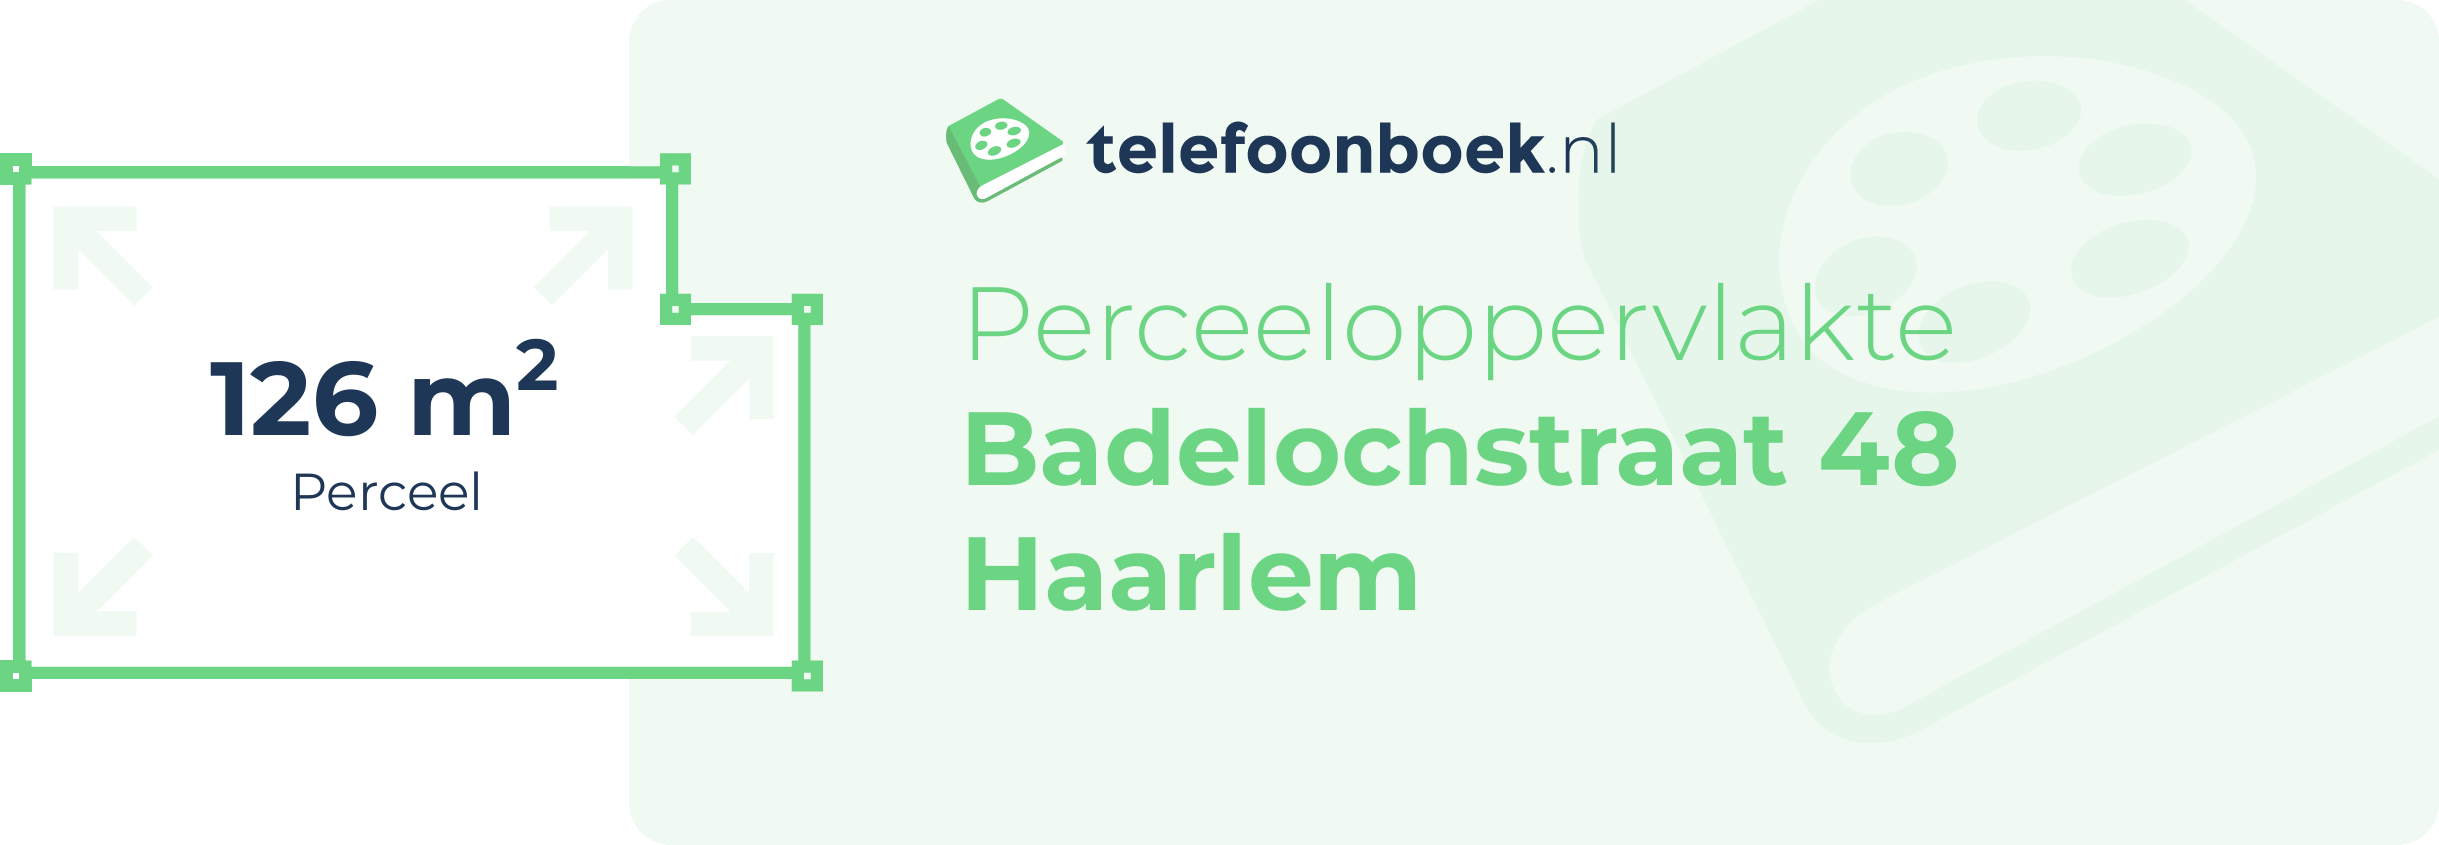 Perceeloppervlakte Badelochstraat 48 Haarlem